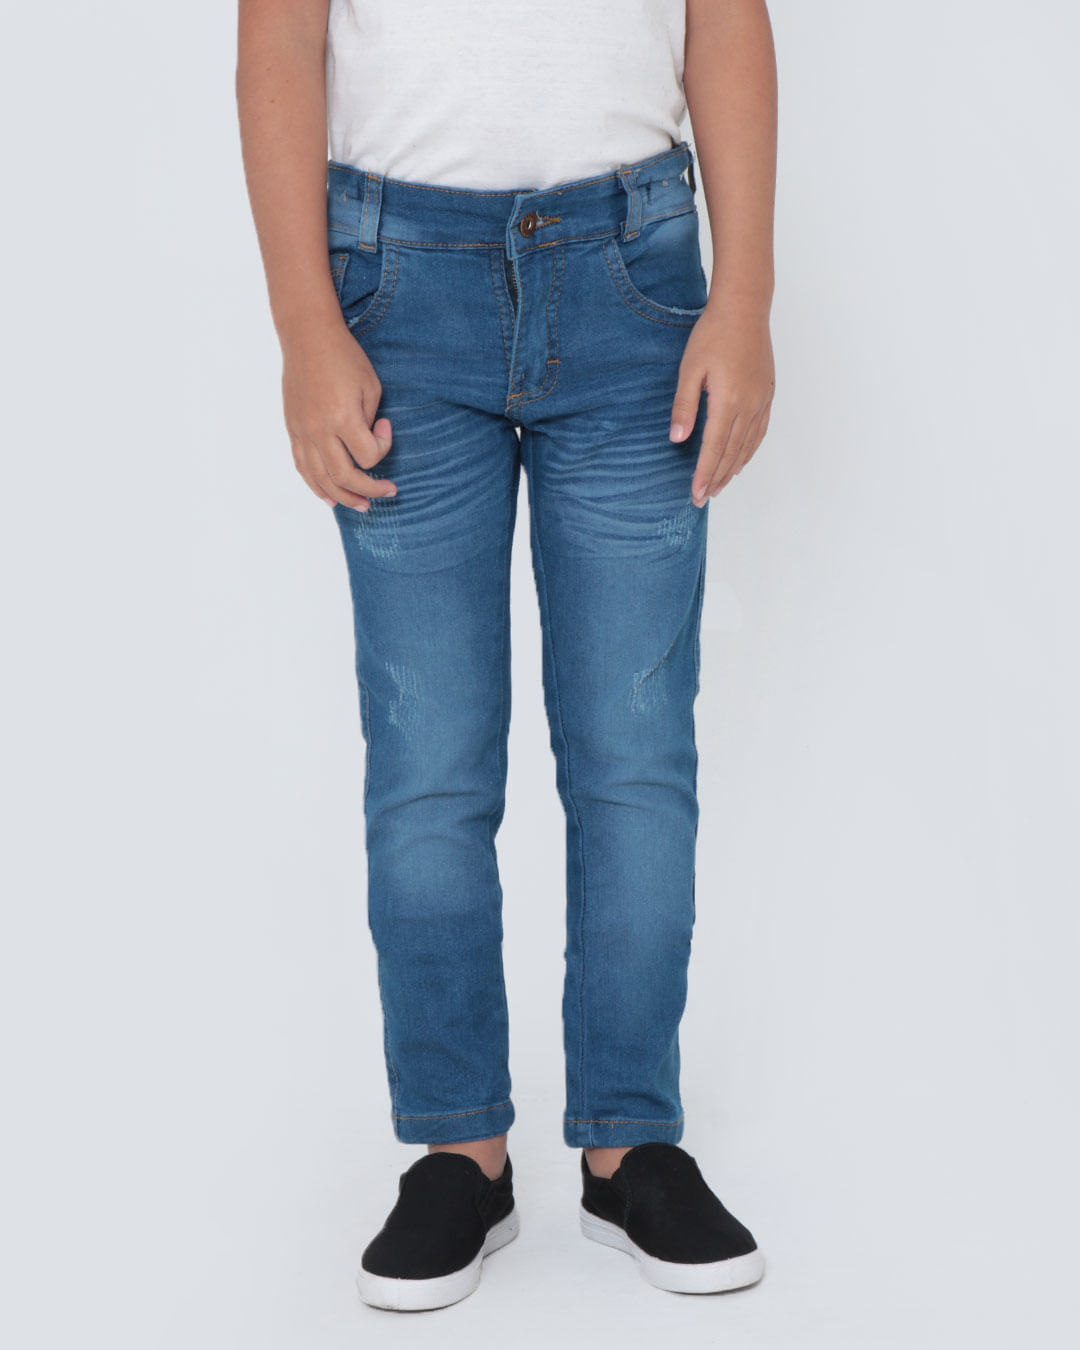 39721000173045-blue-jeans-medio-1